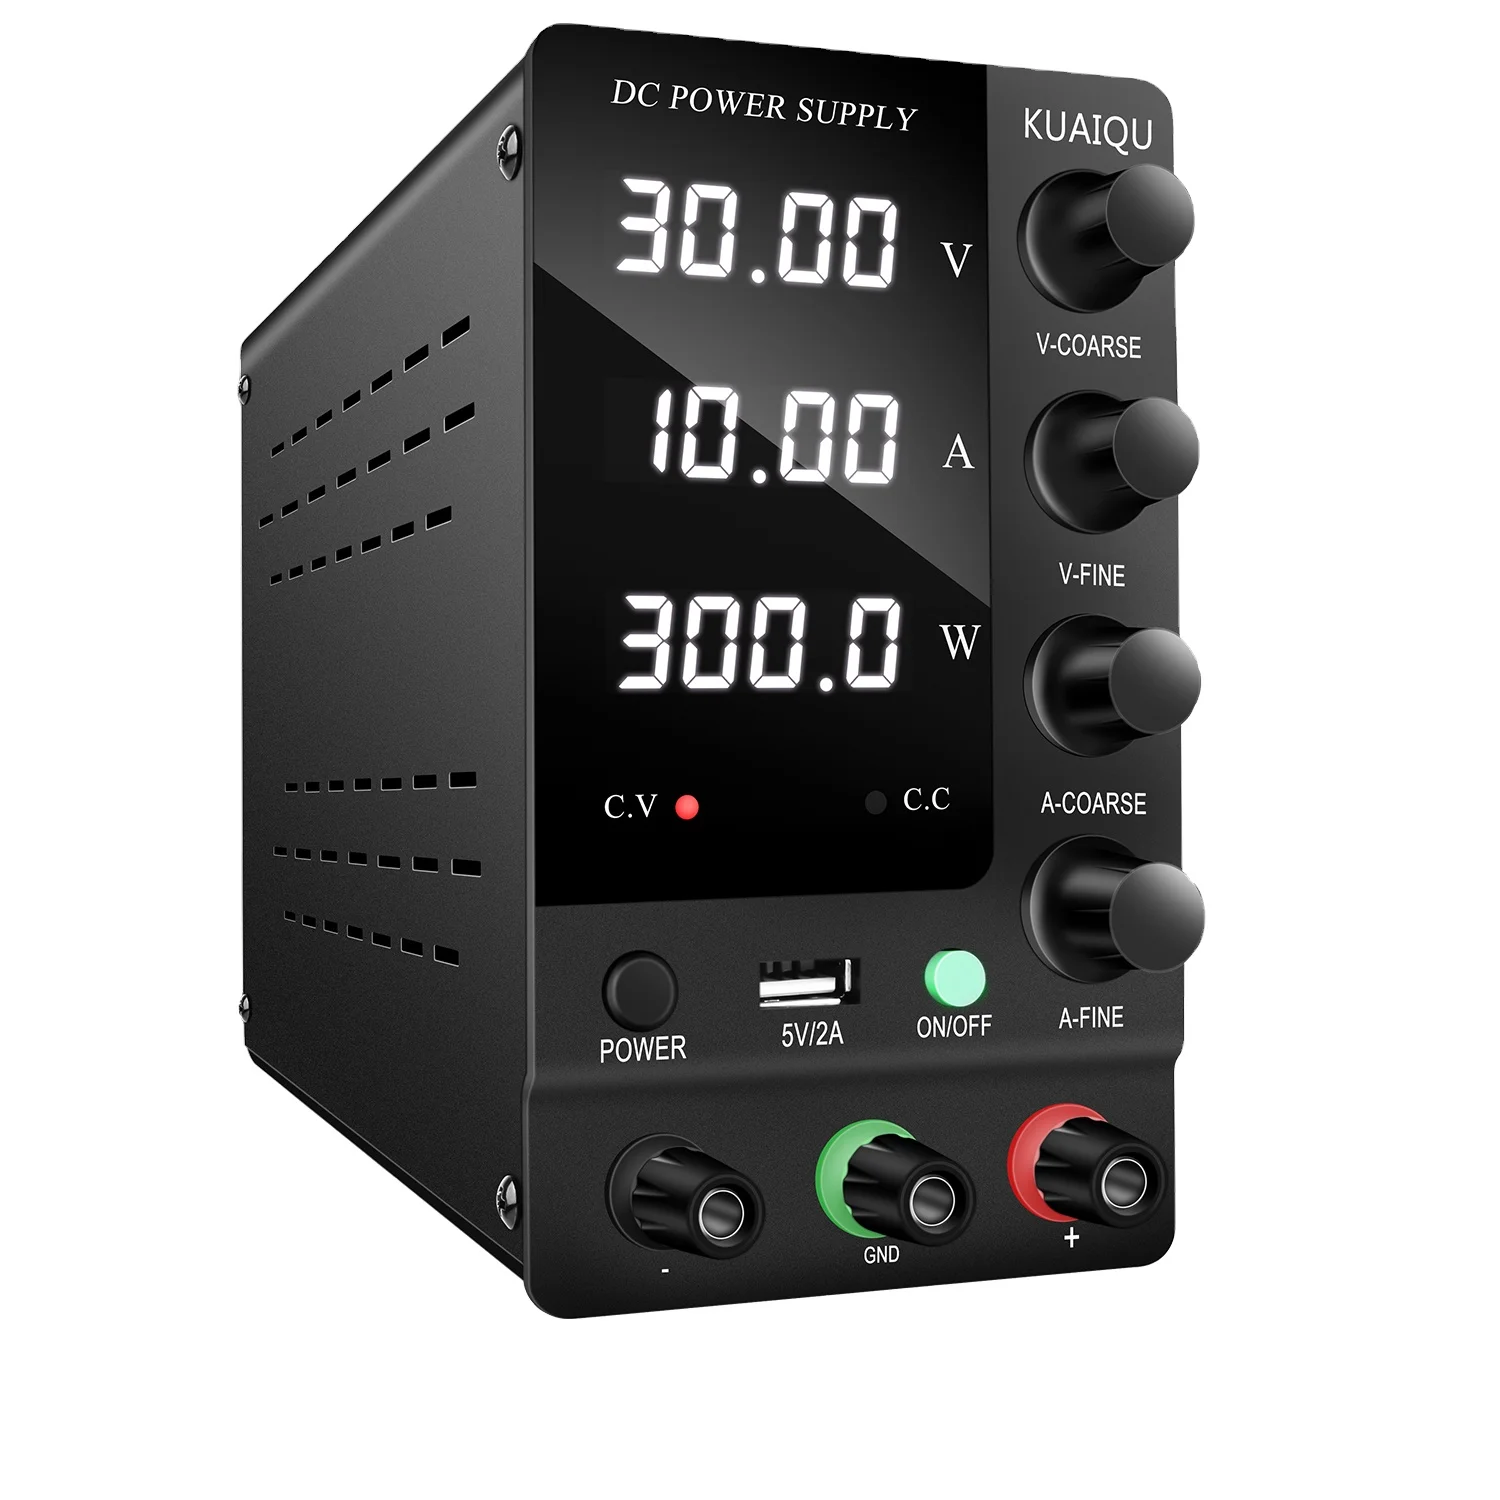 

KUAIQU SPS-C3010 Black Laboratory Switching AC To DC Power Supply Adjustable Desktop Four-Digit LED Digital Display 30V 10A